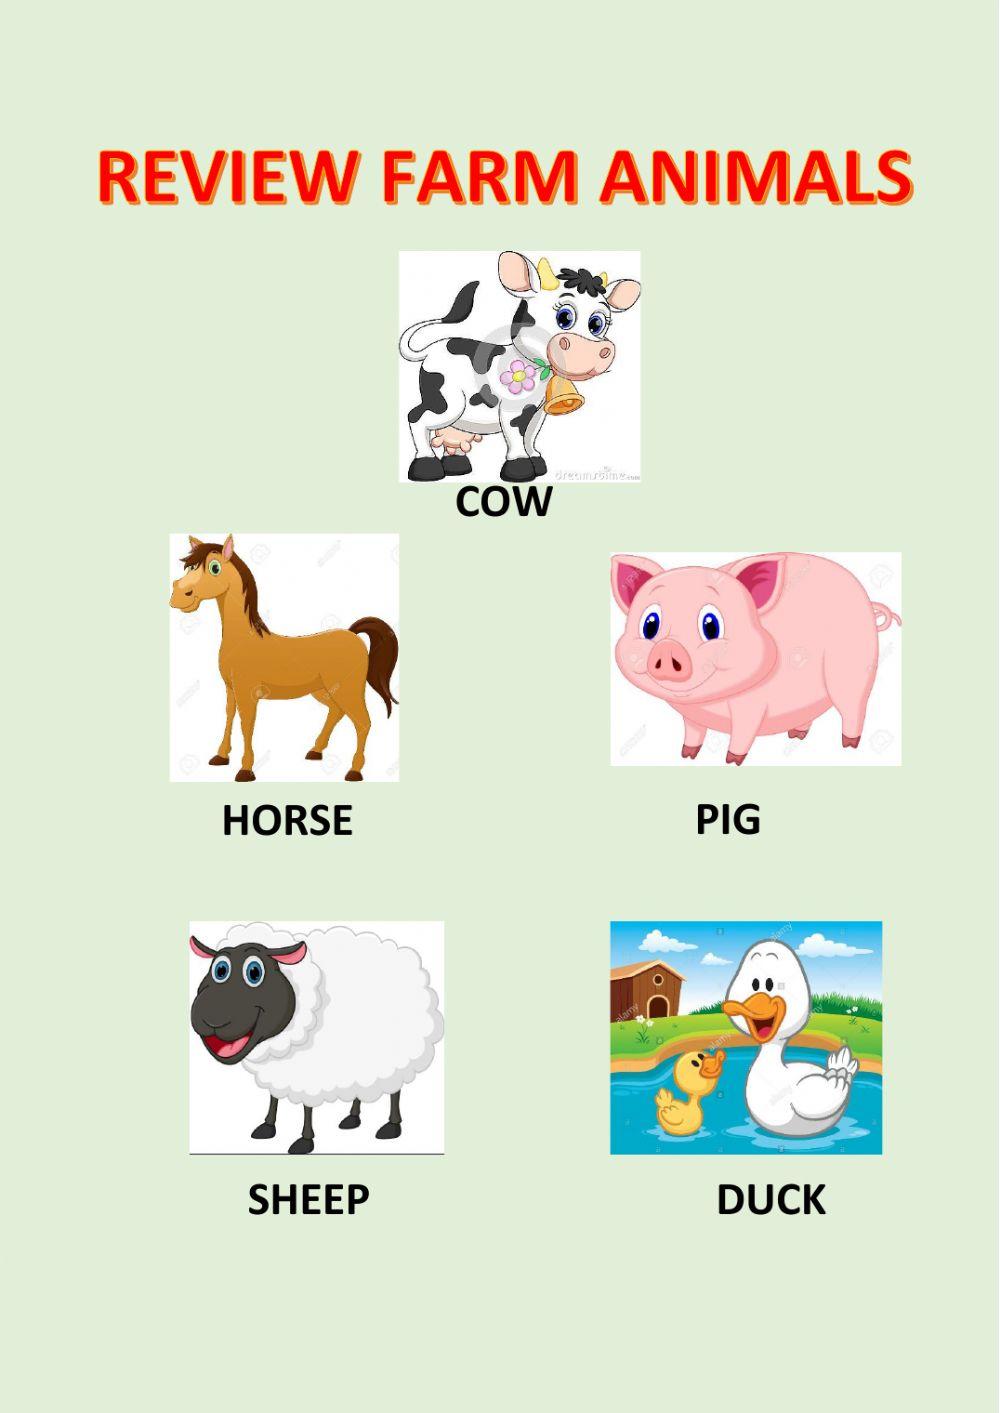 Review farm animals